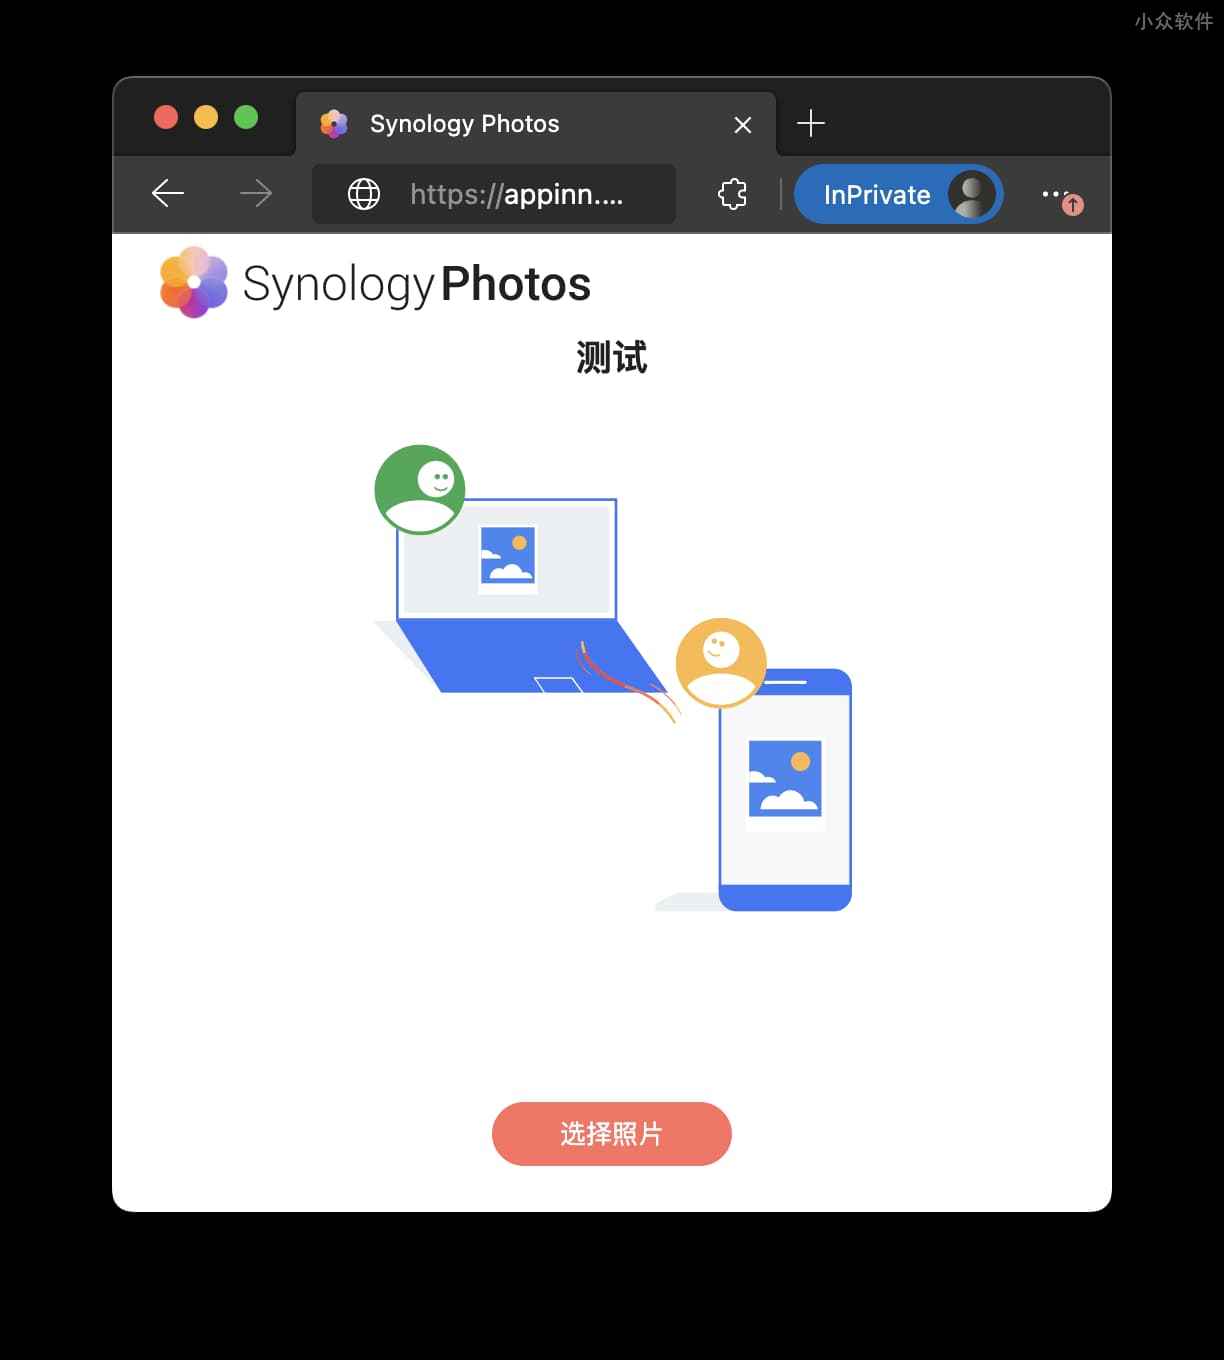 Synology Photos 套件更新，支持创建照片请求链接，向其他用户及访客搜集照片 4